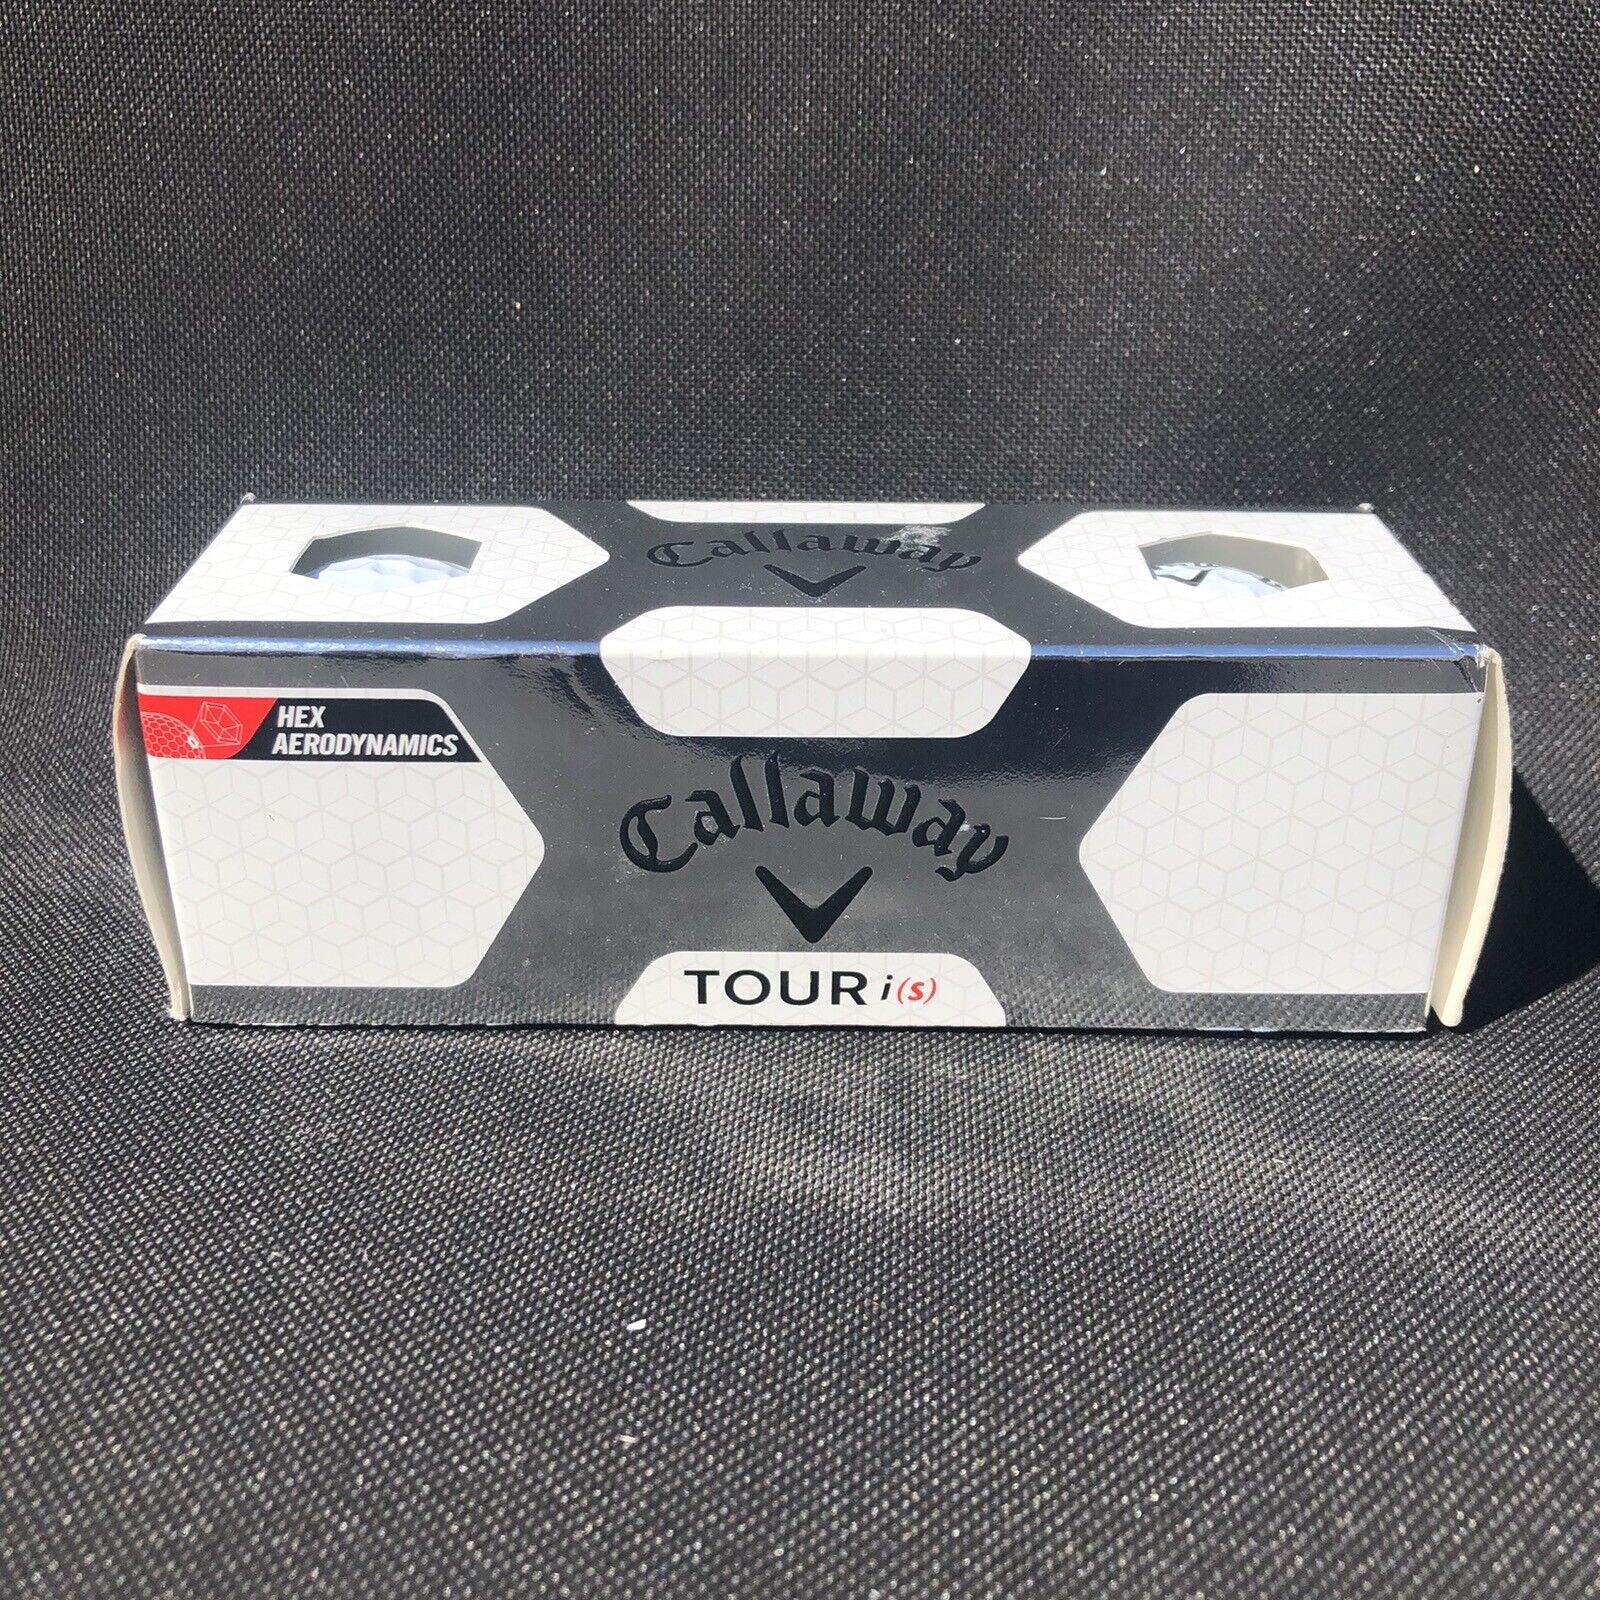 NEW Callaway Hex Aerodynamics Tour 3 Golf Balls Tour i(S) Soft Greenside Control